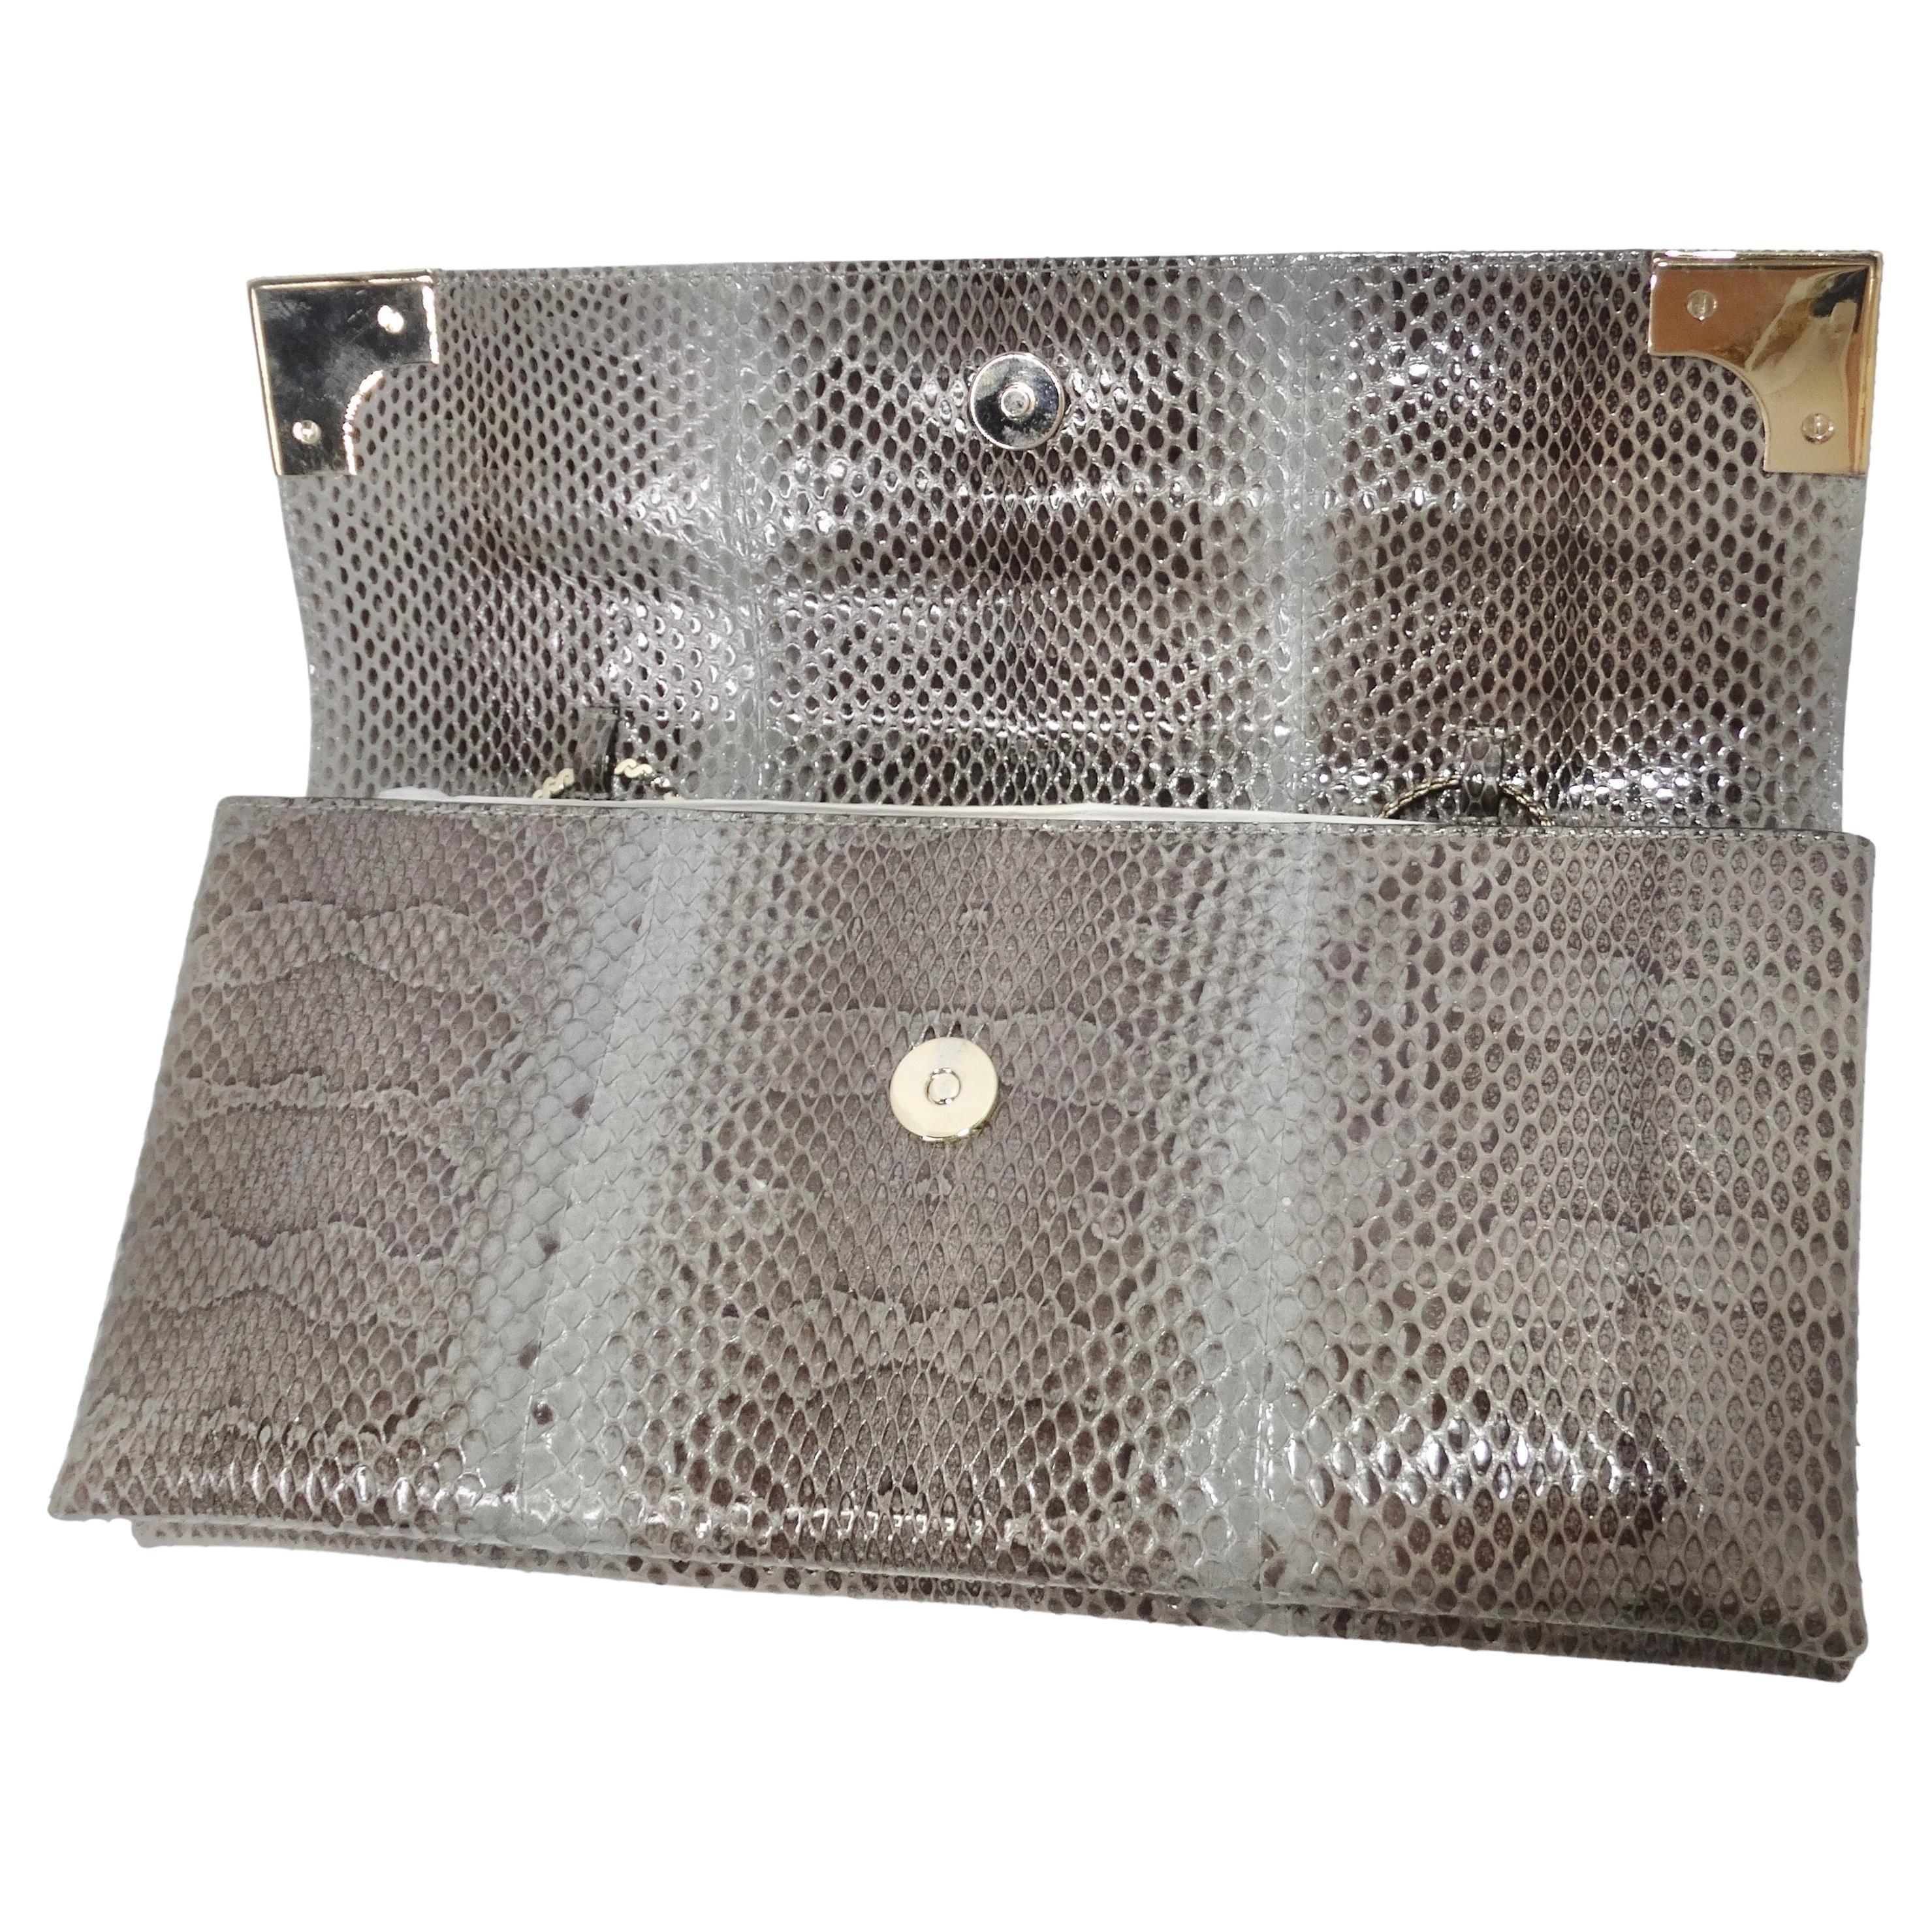 Valentino Exotic Snakeskin Fold Over Handbag In New Condition For Sale In Scottsdale, AZ